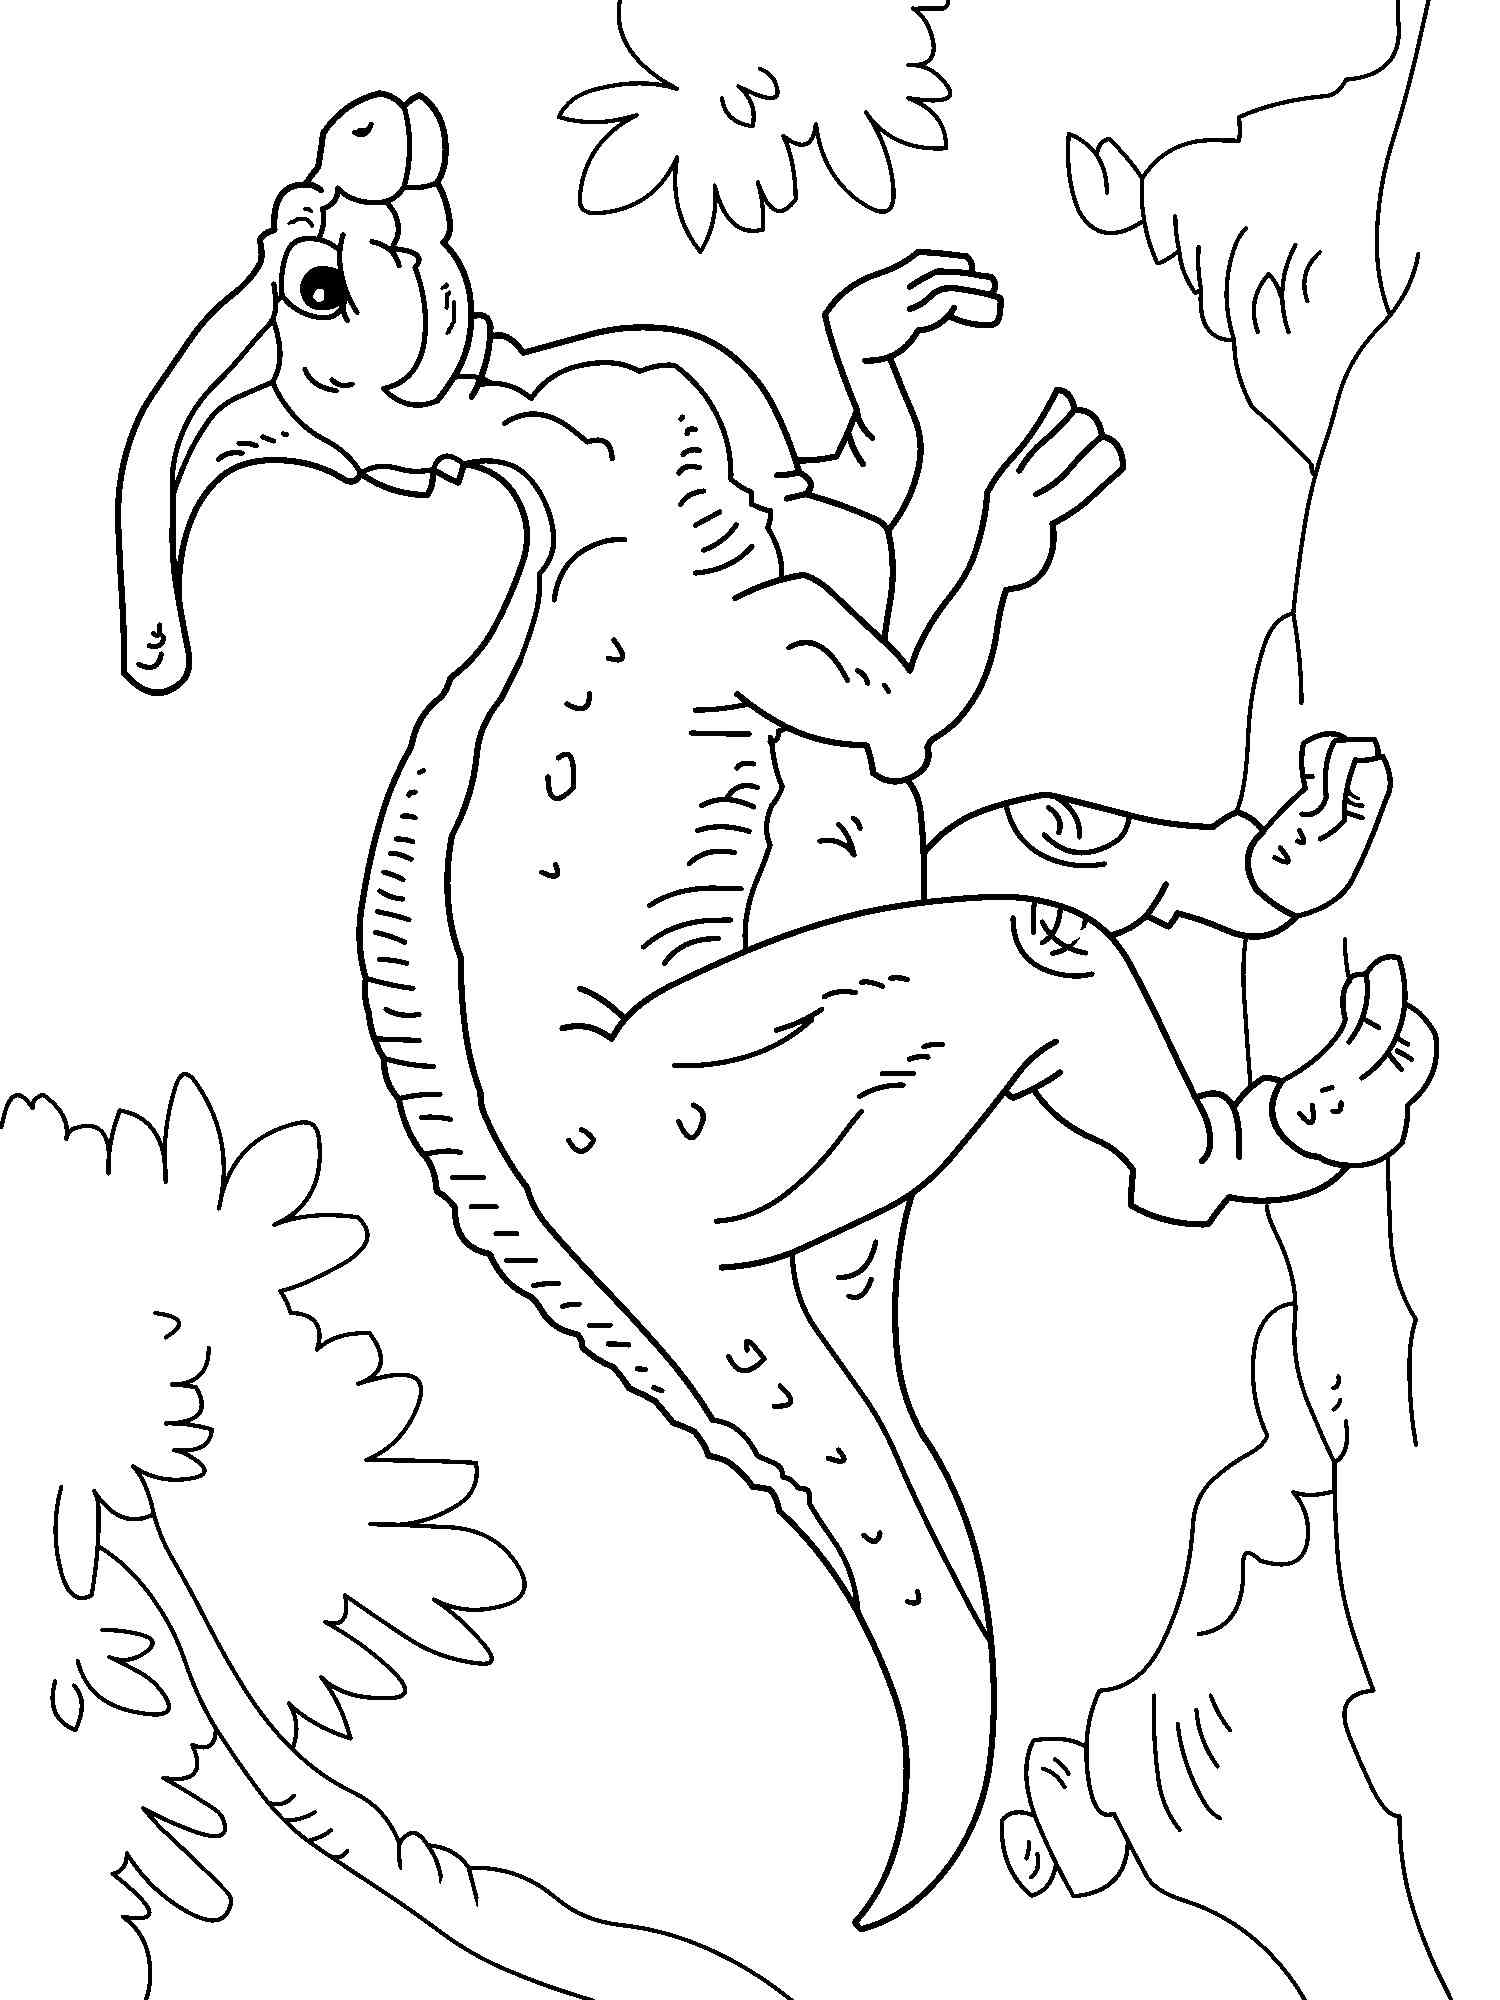 Walking Parasaurolophus coloring page